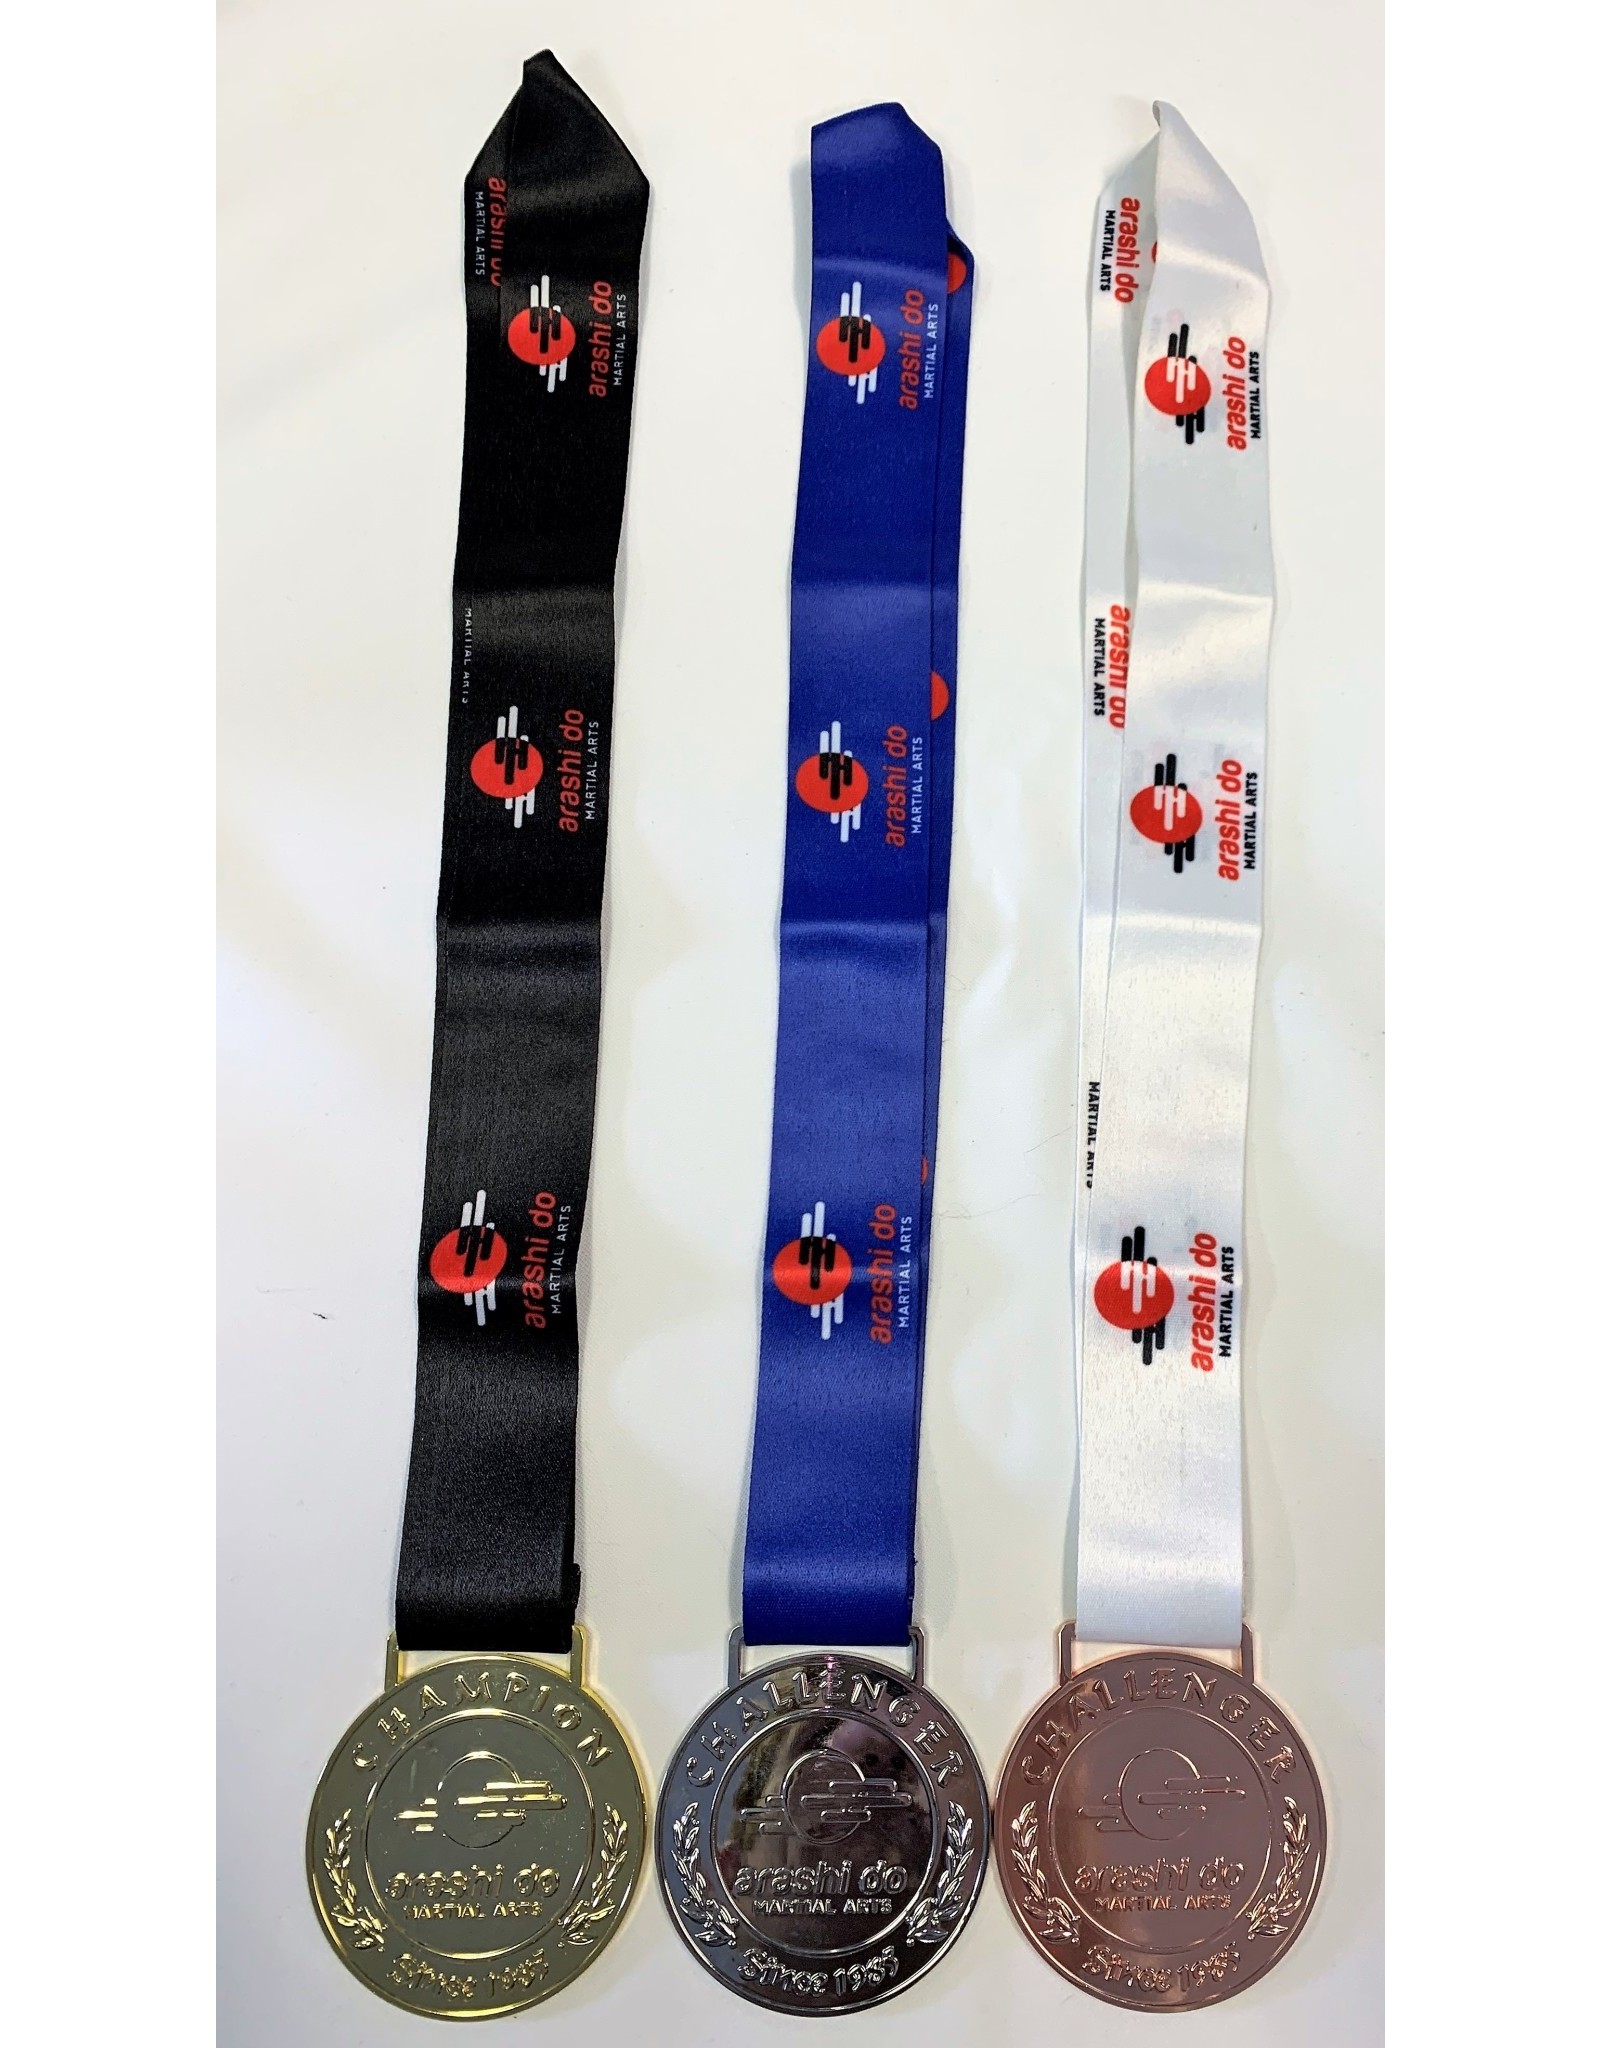 ADMA Medals - Gold, Silver, Bronze